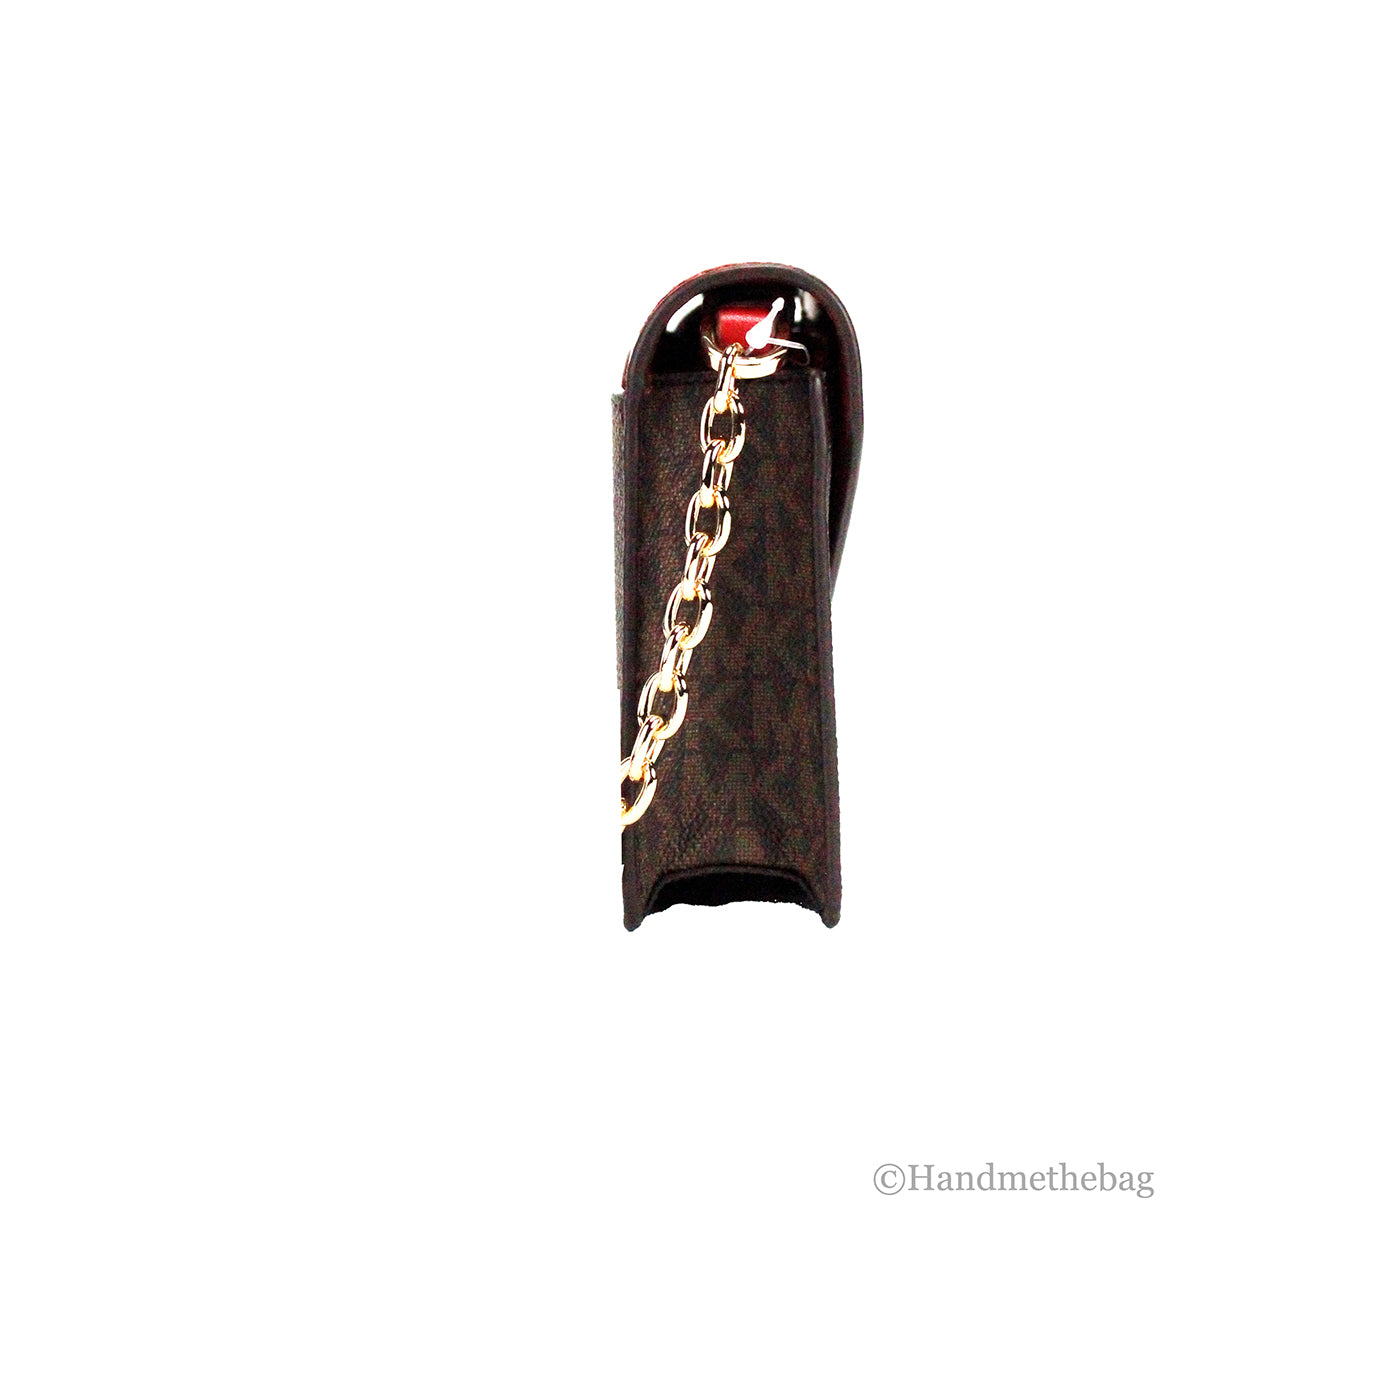 Michael Kors Jet Set Crimson Small Flap Clutch Crossbody Bag